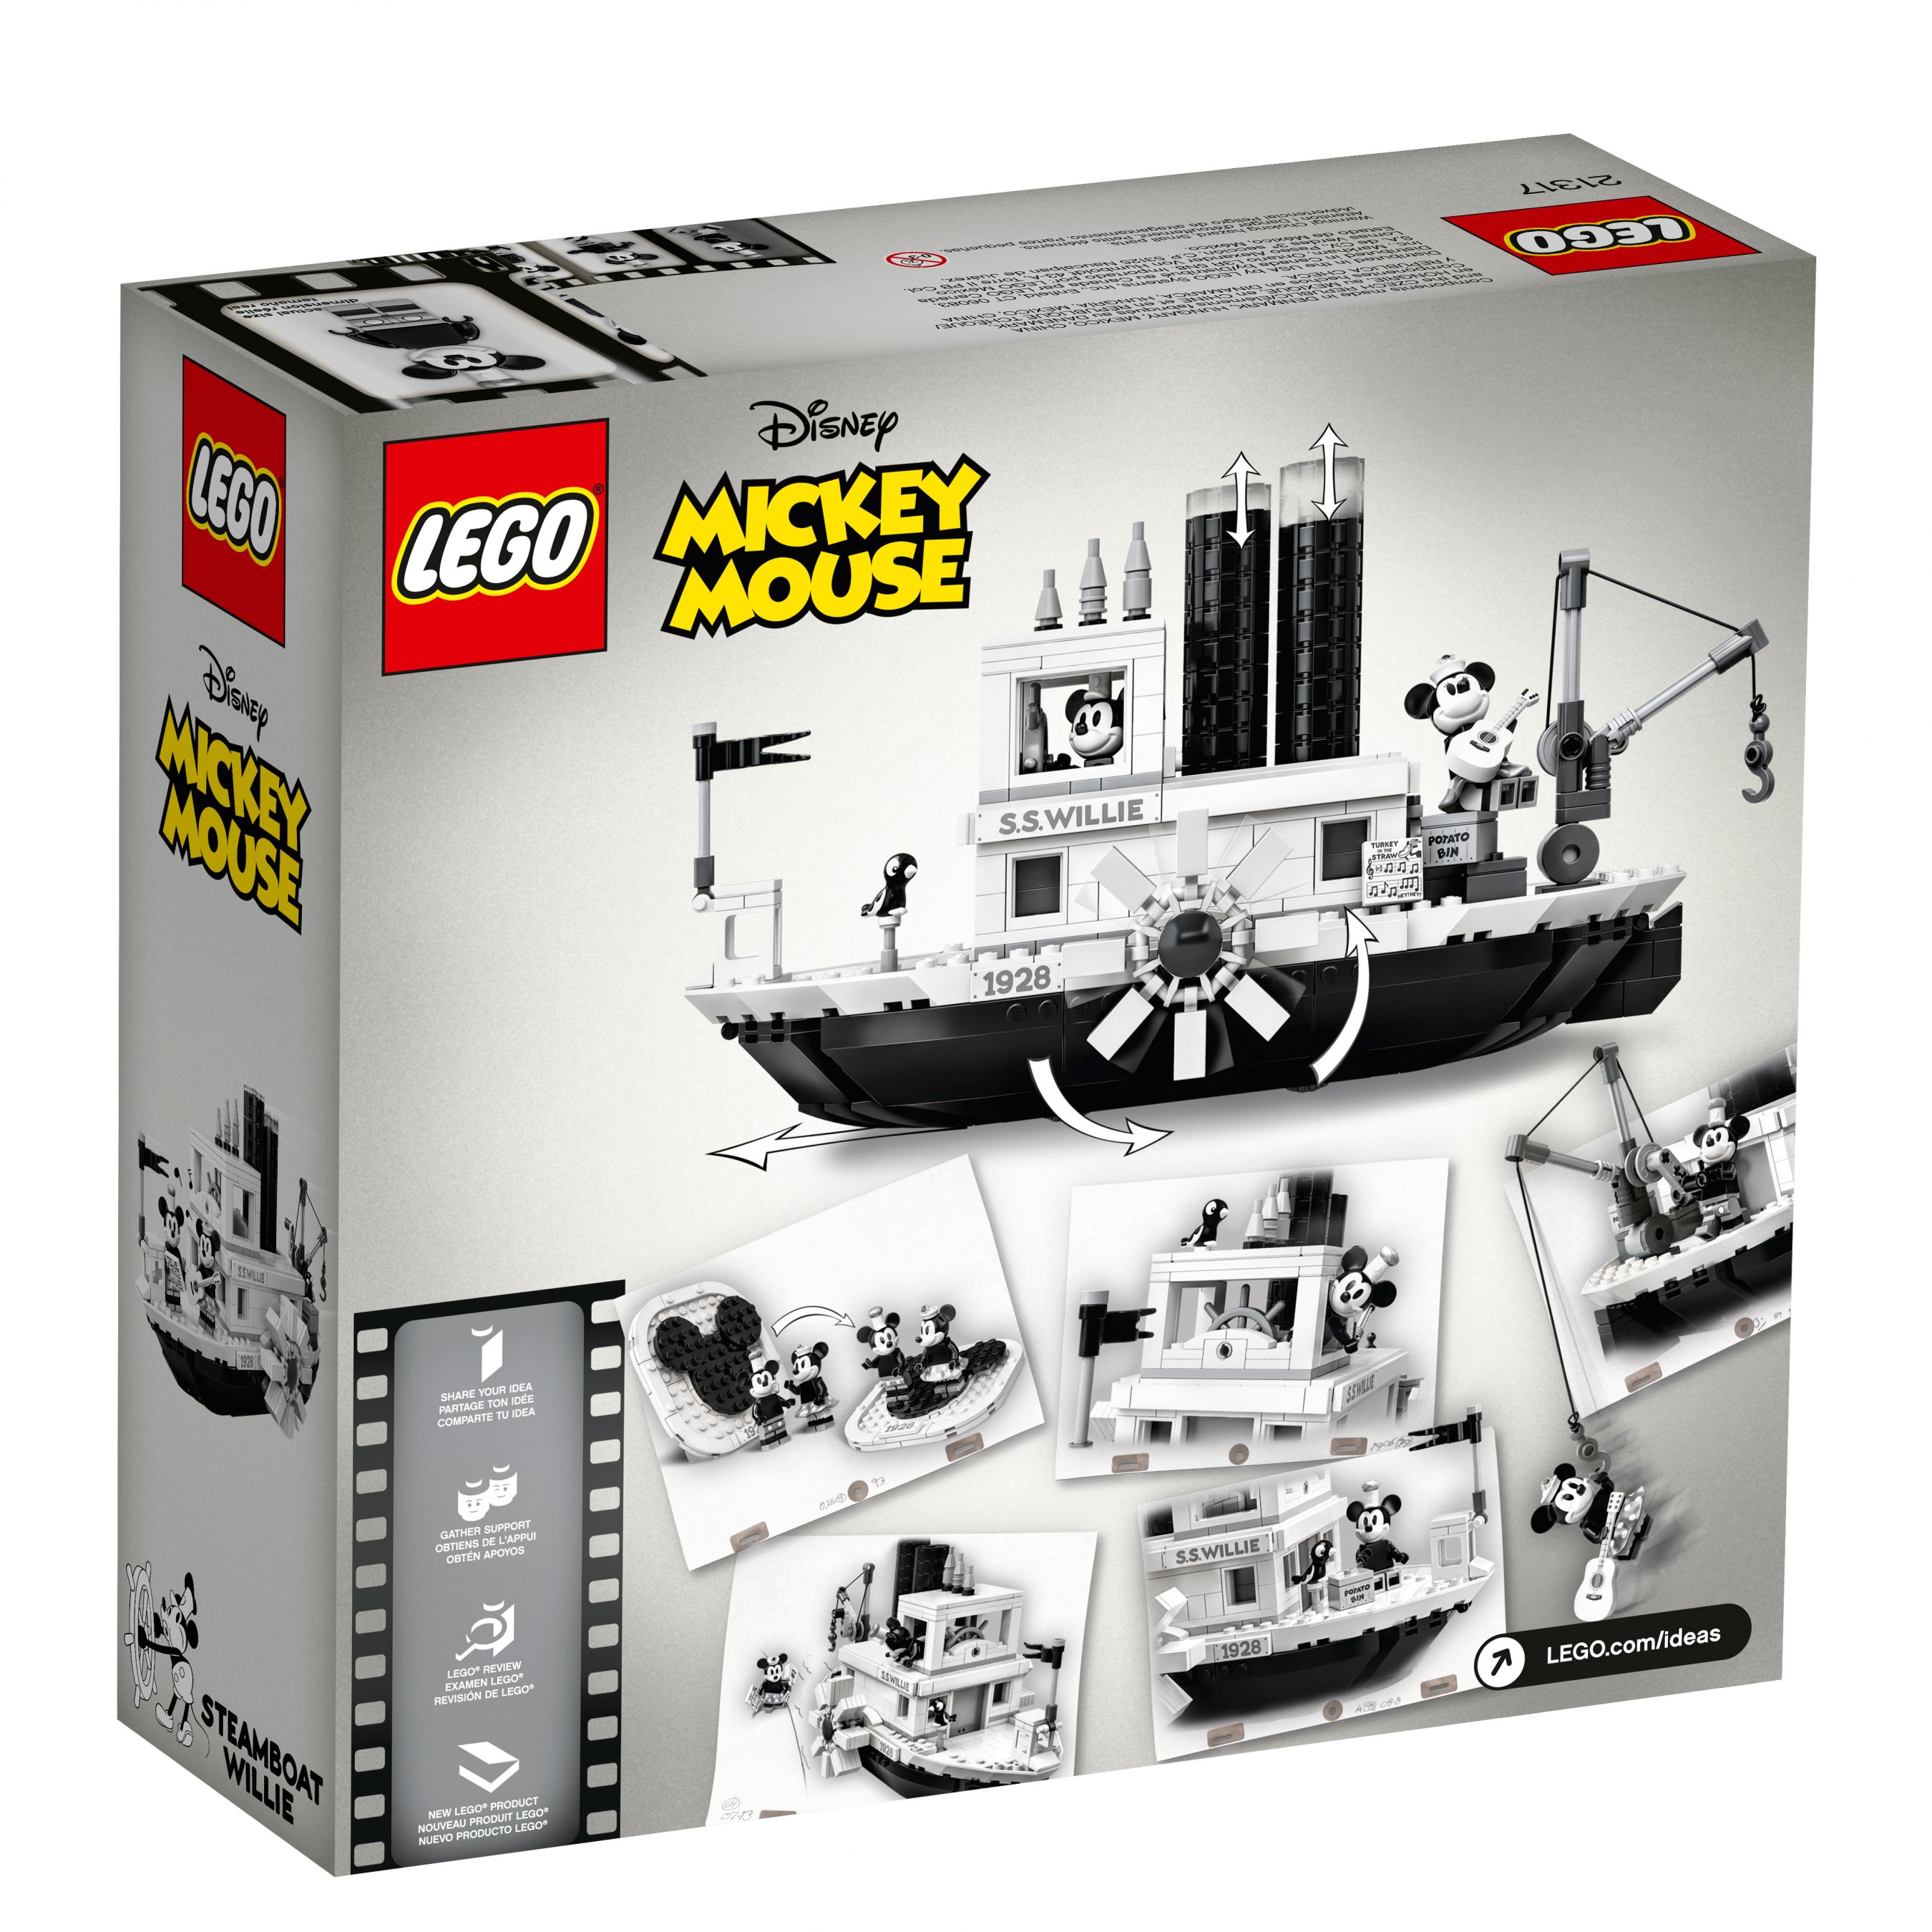 LEGO Ideas 21317 Steamboat Willie LEGO_21317_alt7.jpg